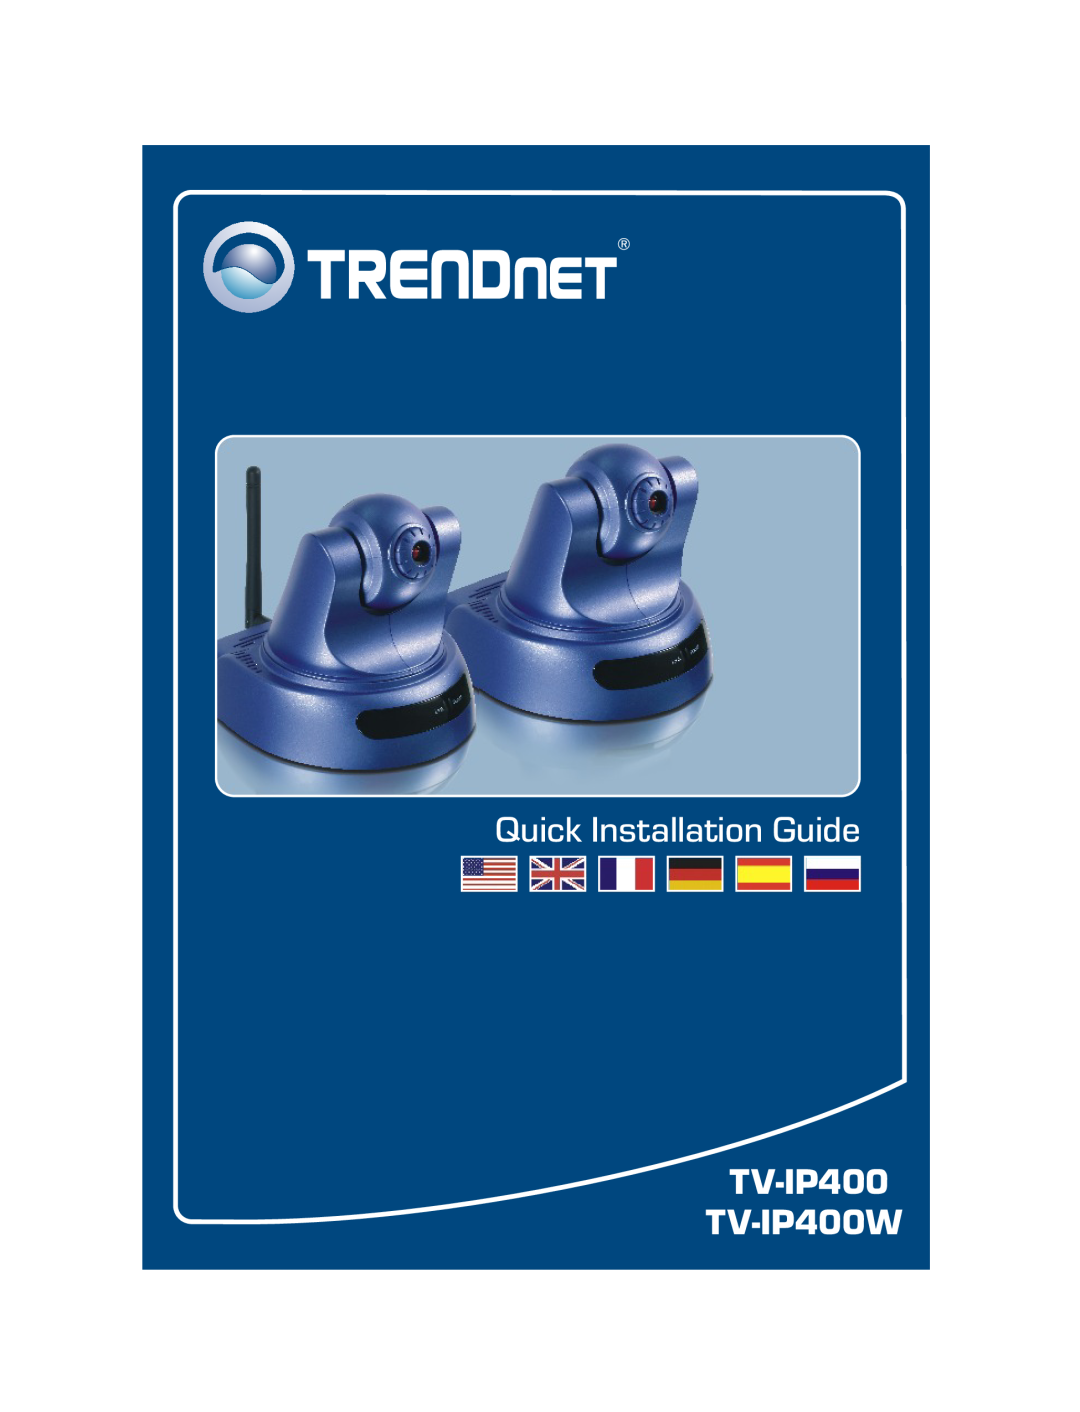 TRENDnet TRENDNET manual Quick Installation Guide, TV-IP212/TV-IP212W TV-IP312/TV-IP312W 